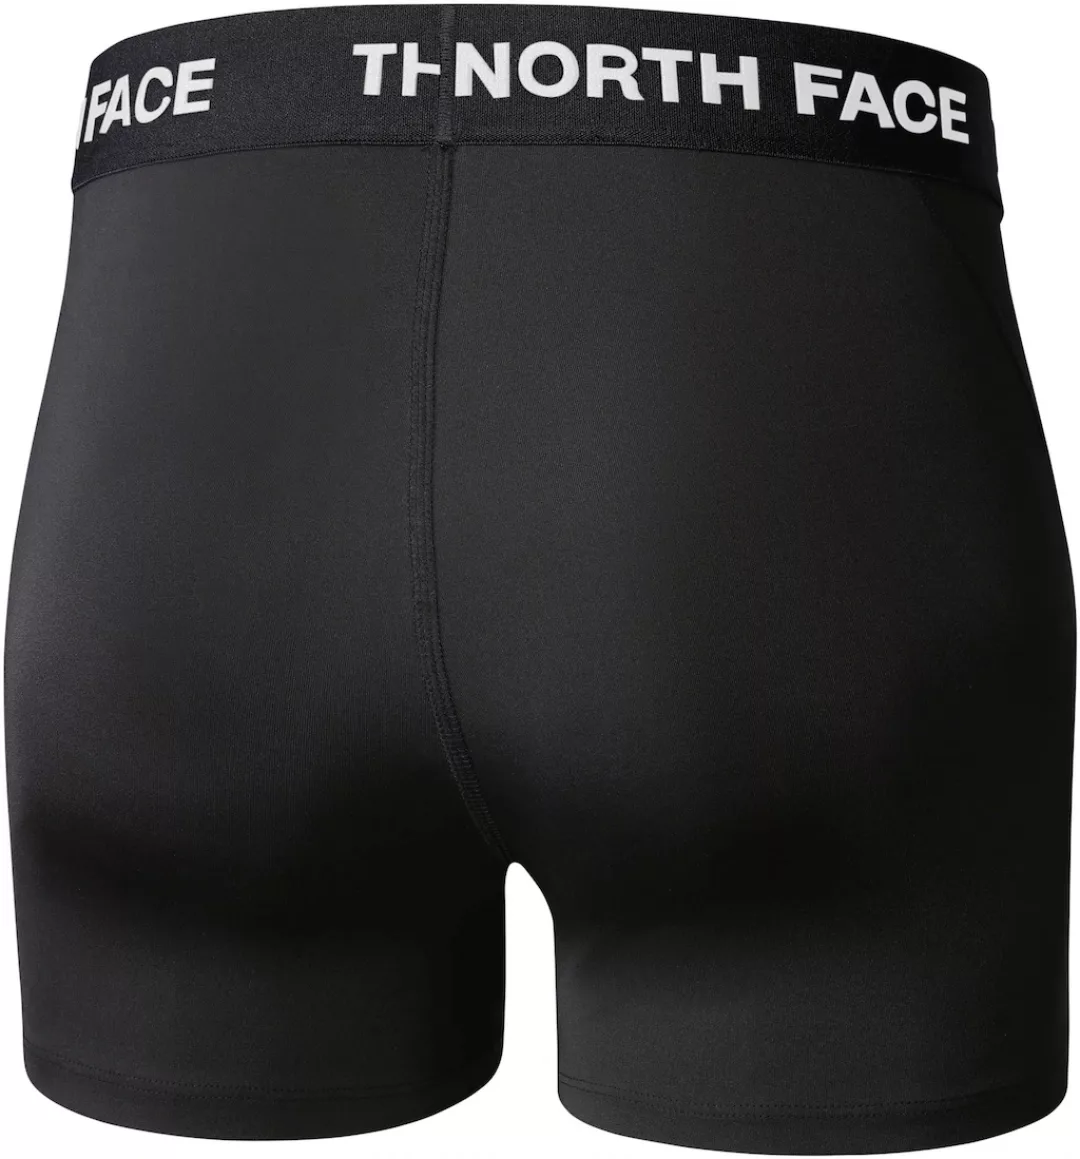 The North Face Trainingsshorts "TRAINING SHORT" günstig online kaufen